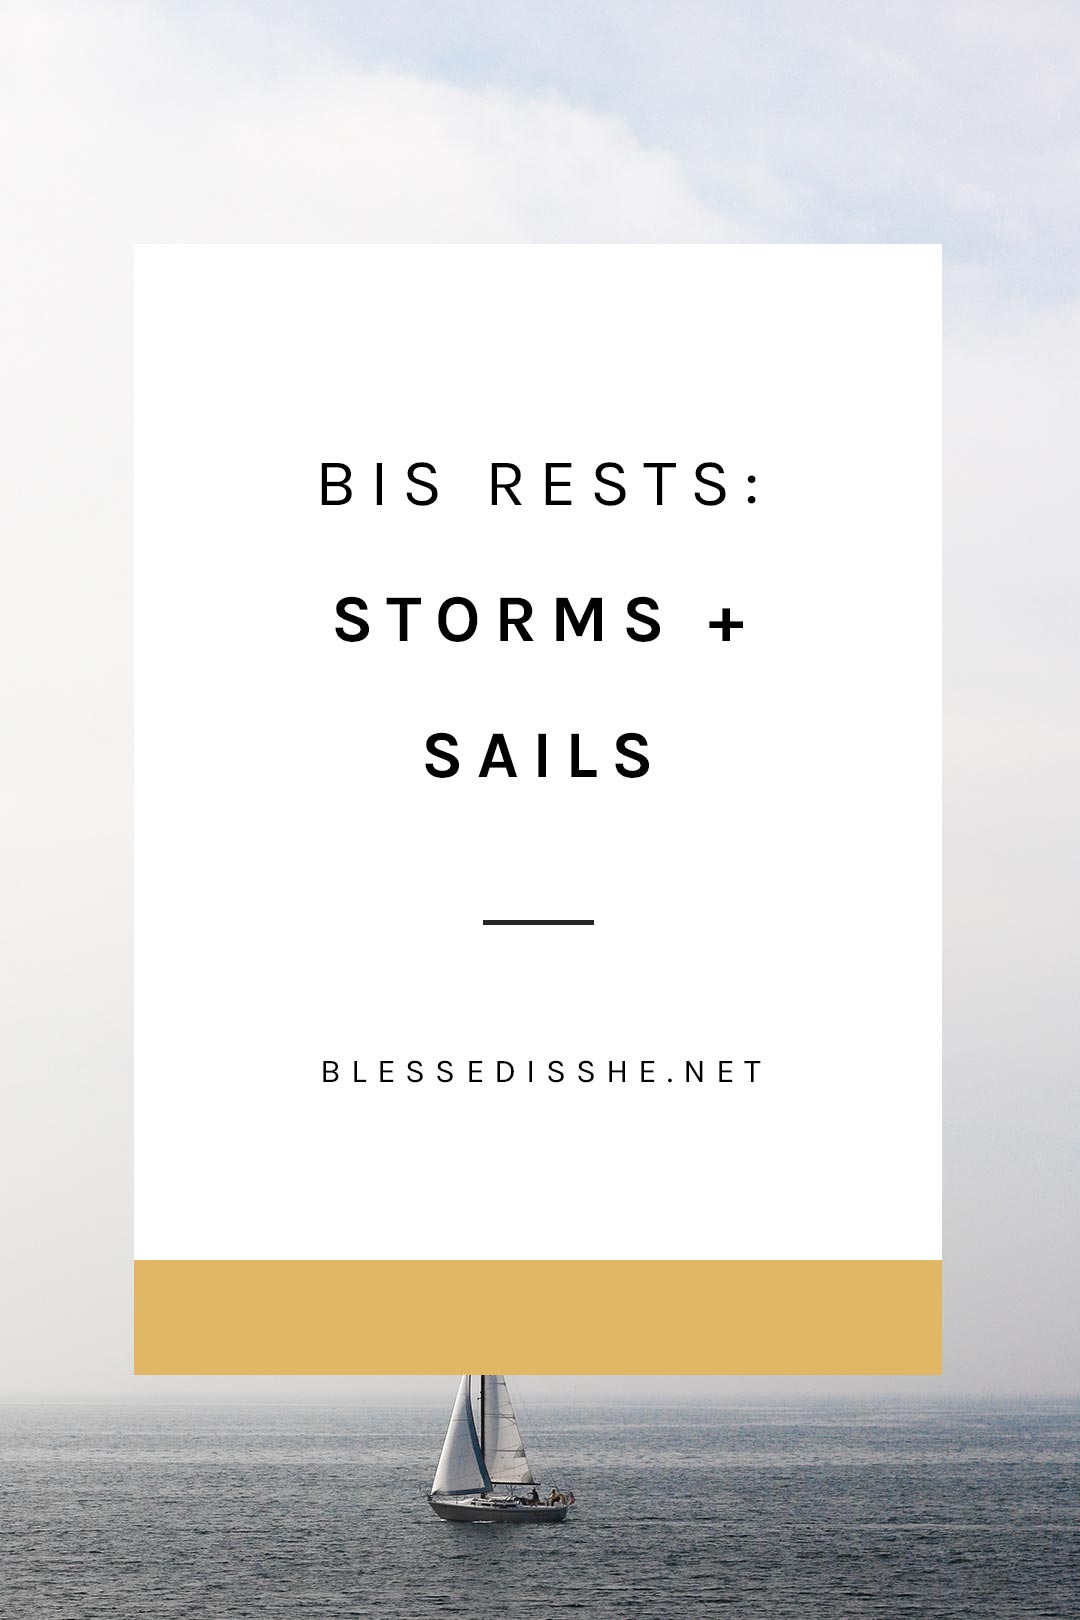 bis rests: storms + sails